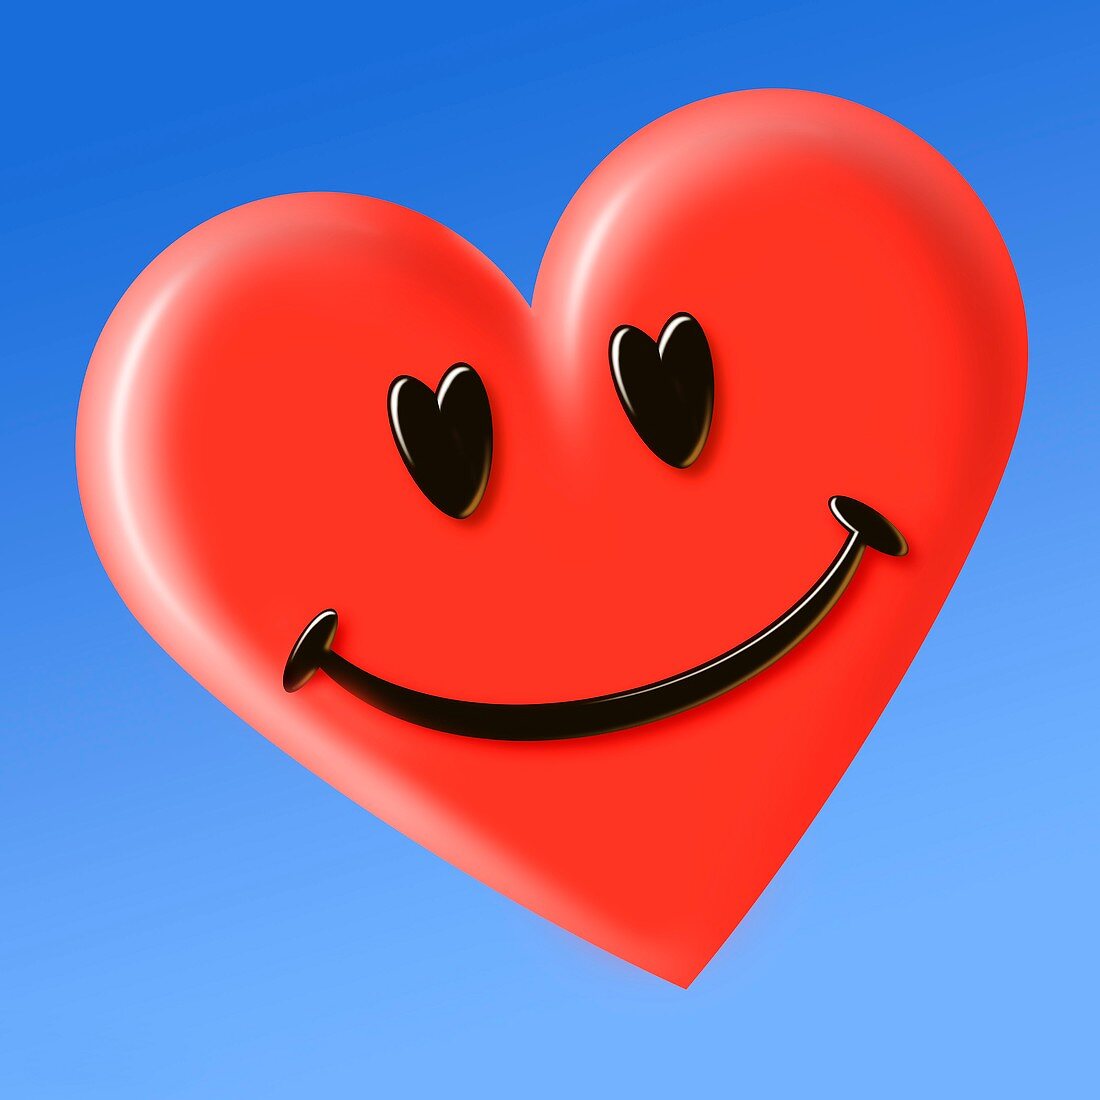 Smiley heart face symbol